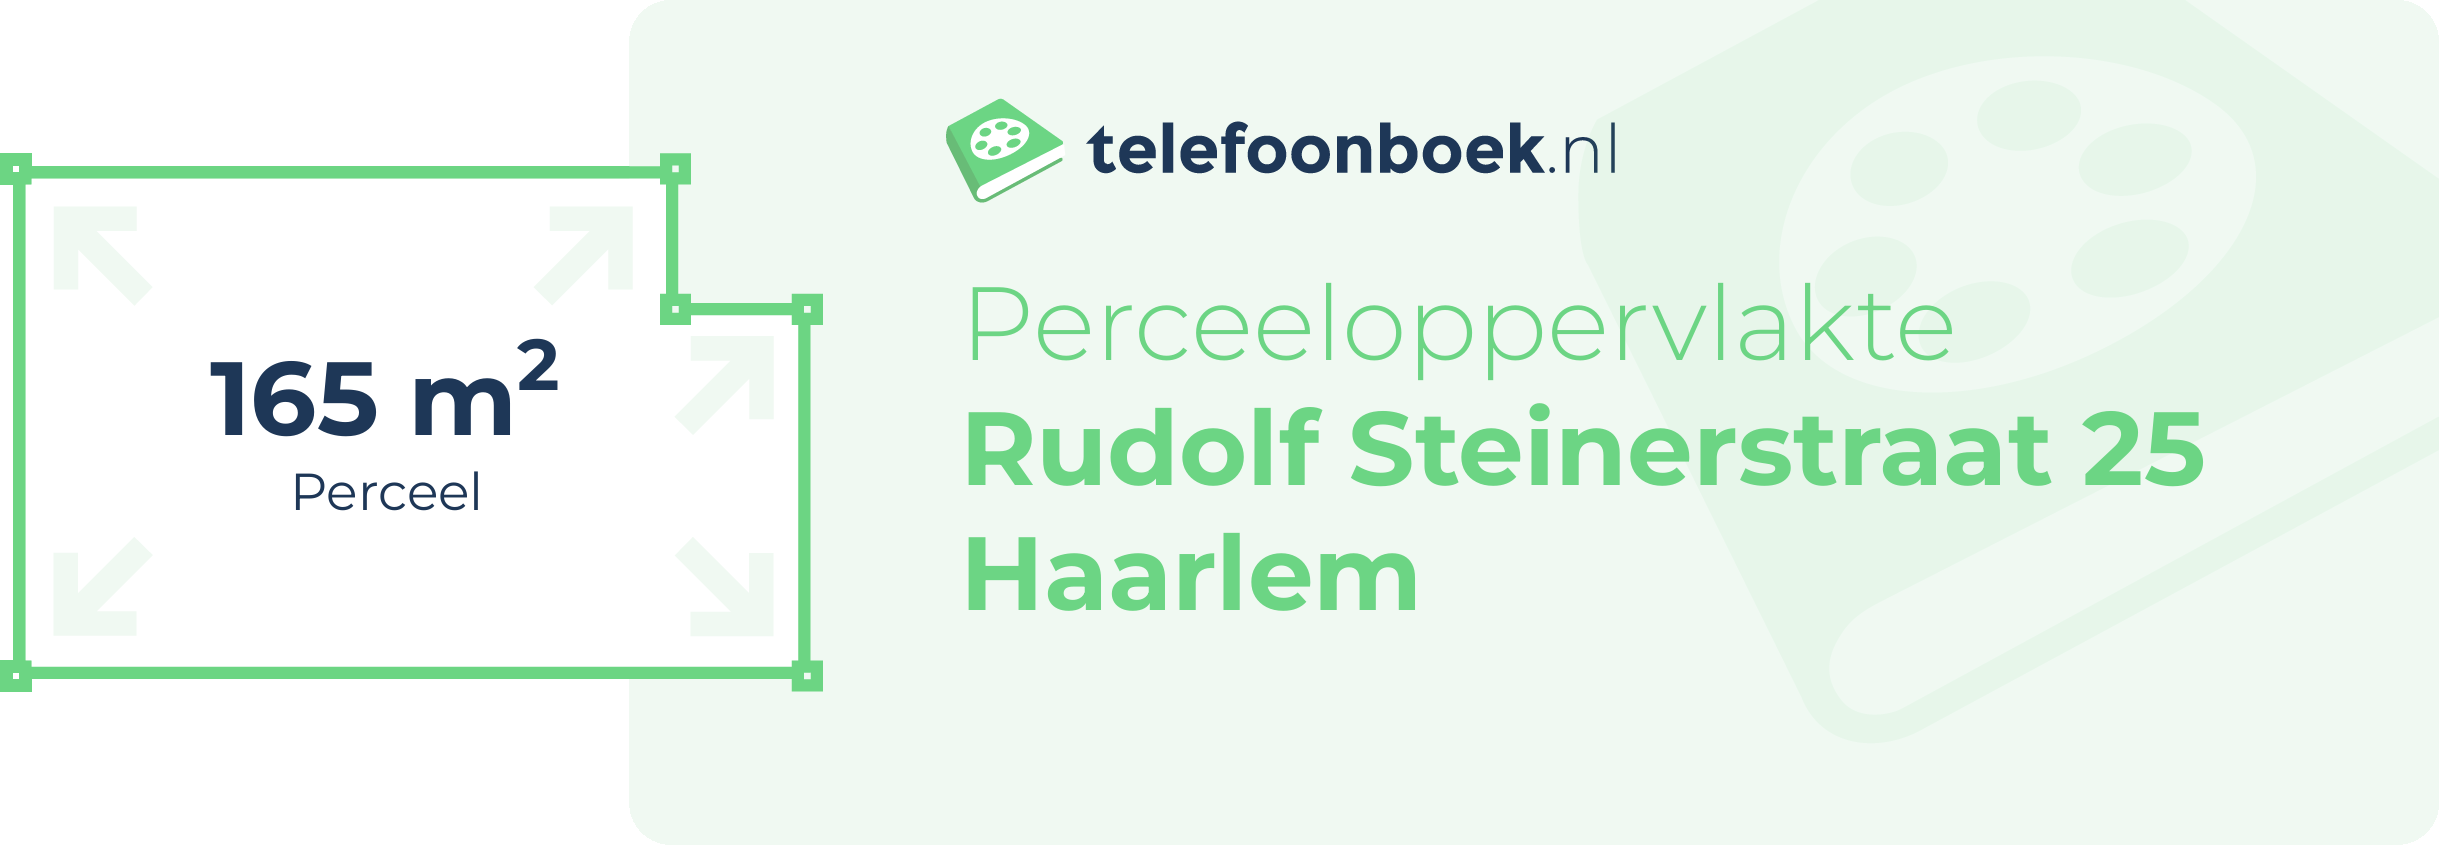 Perceeloppervlakte Rudolf Steinerstraat 25 Haarlem